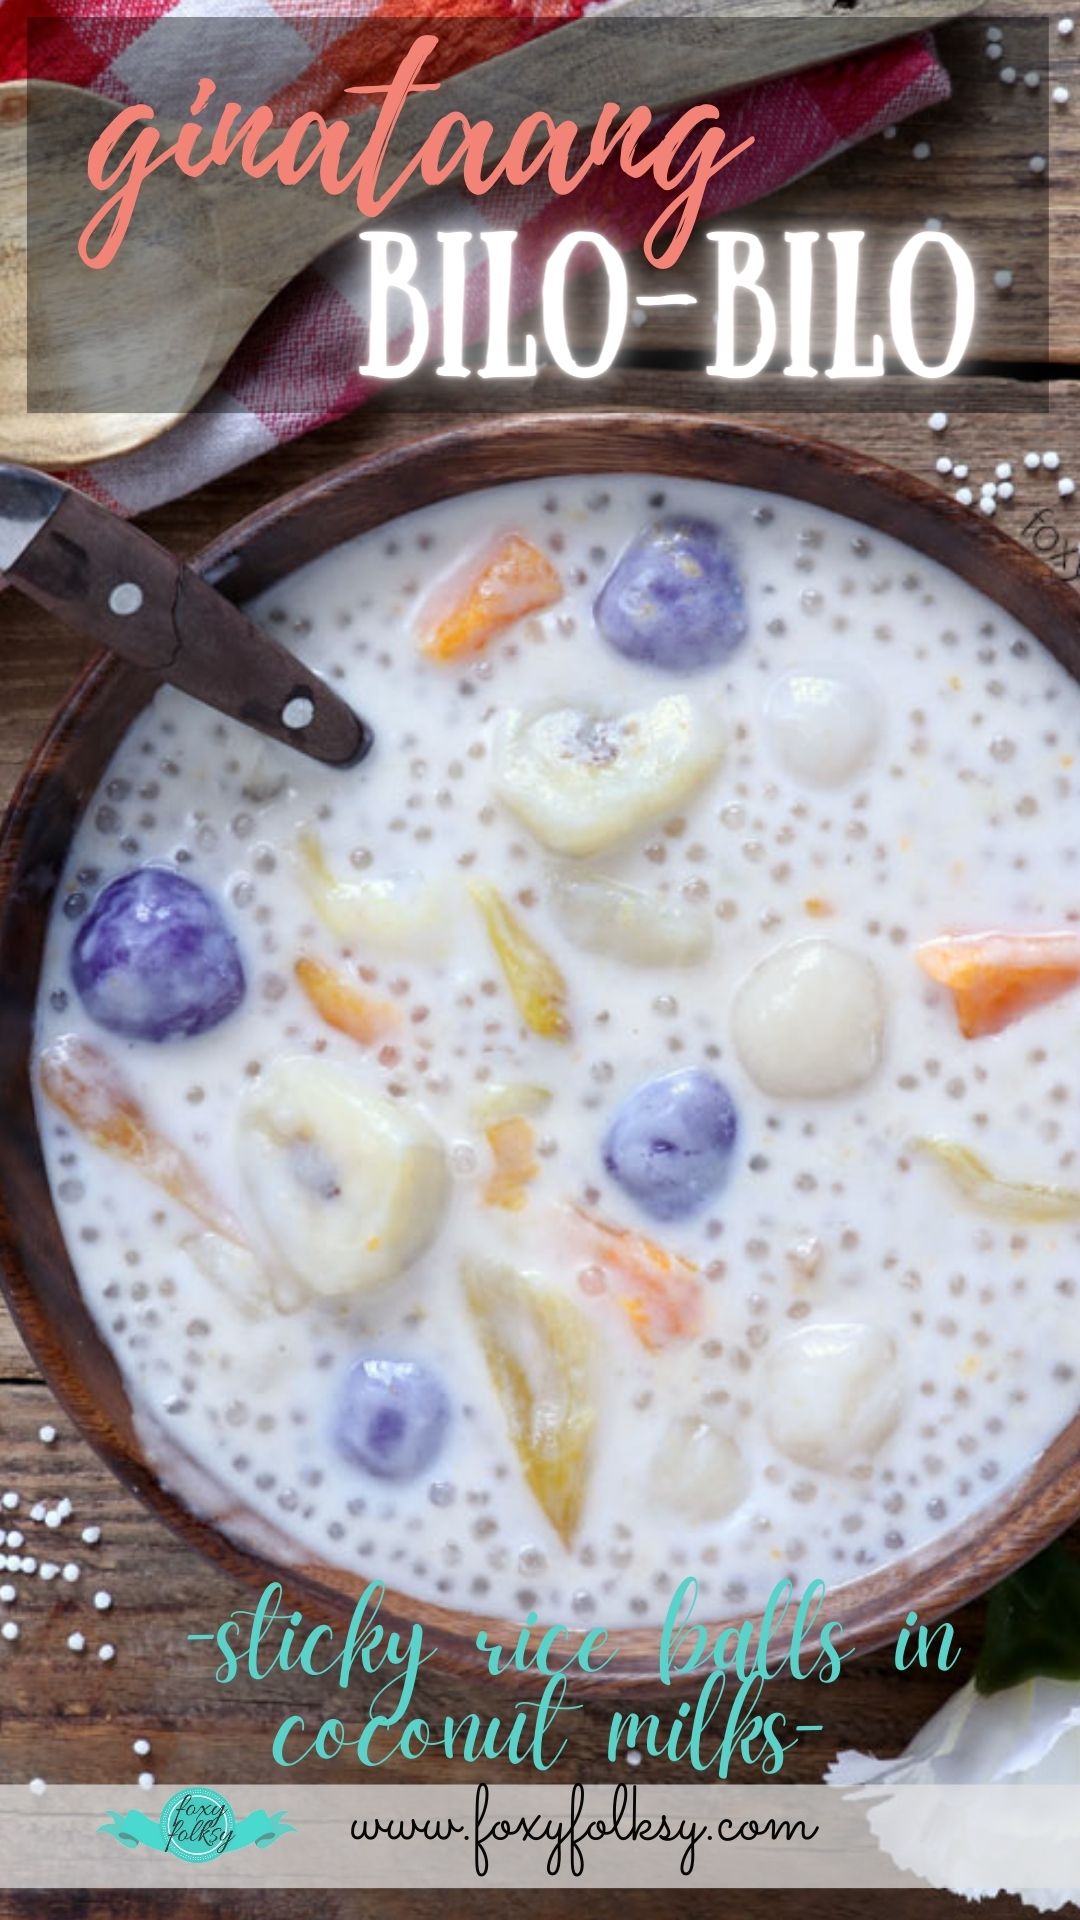 Ginataang Bilo-bilo or Ginataang halo-halo in a bowl with plantain banana, sweet potato, jackfruit, tapioca pearls, and sticky rice balls in creamy coconut milk.